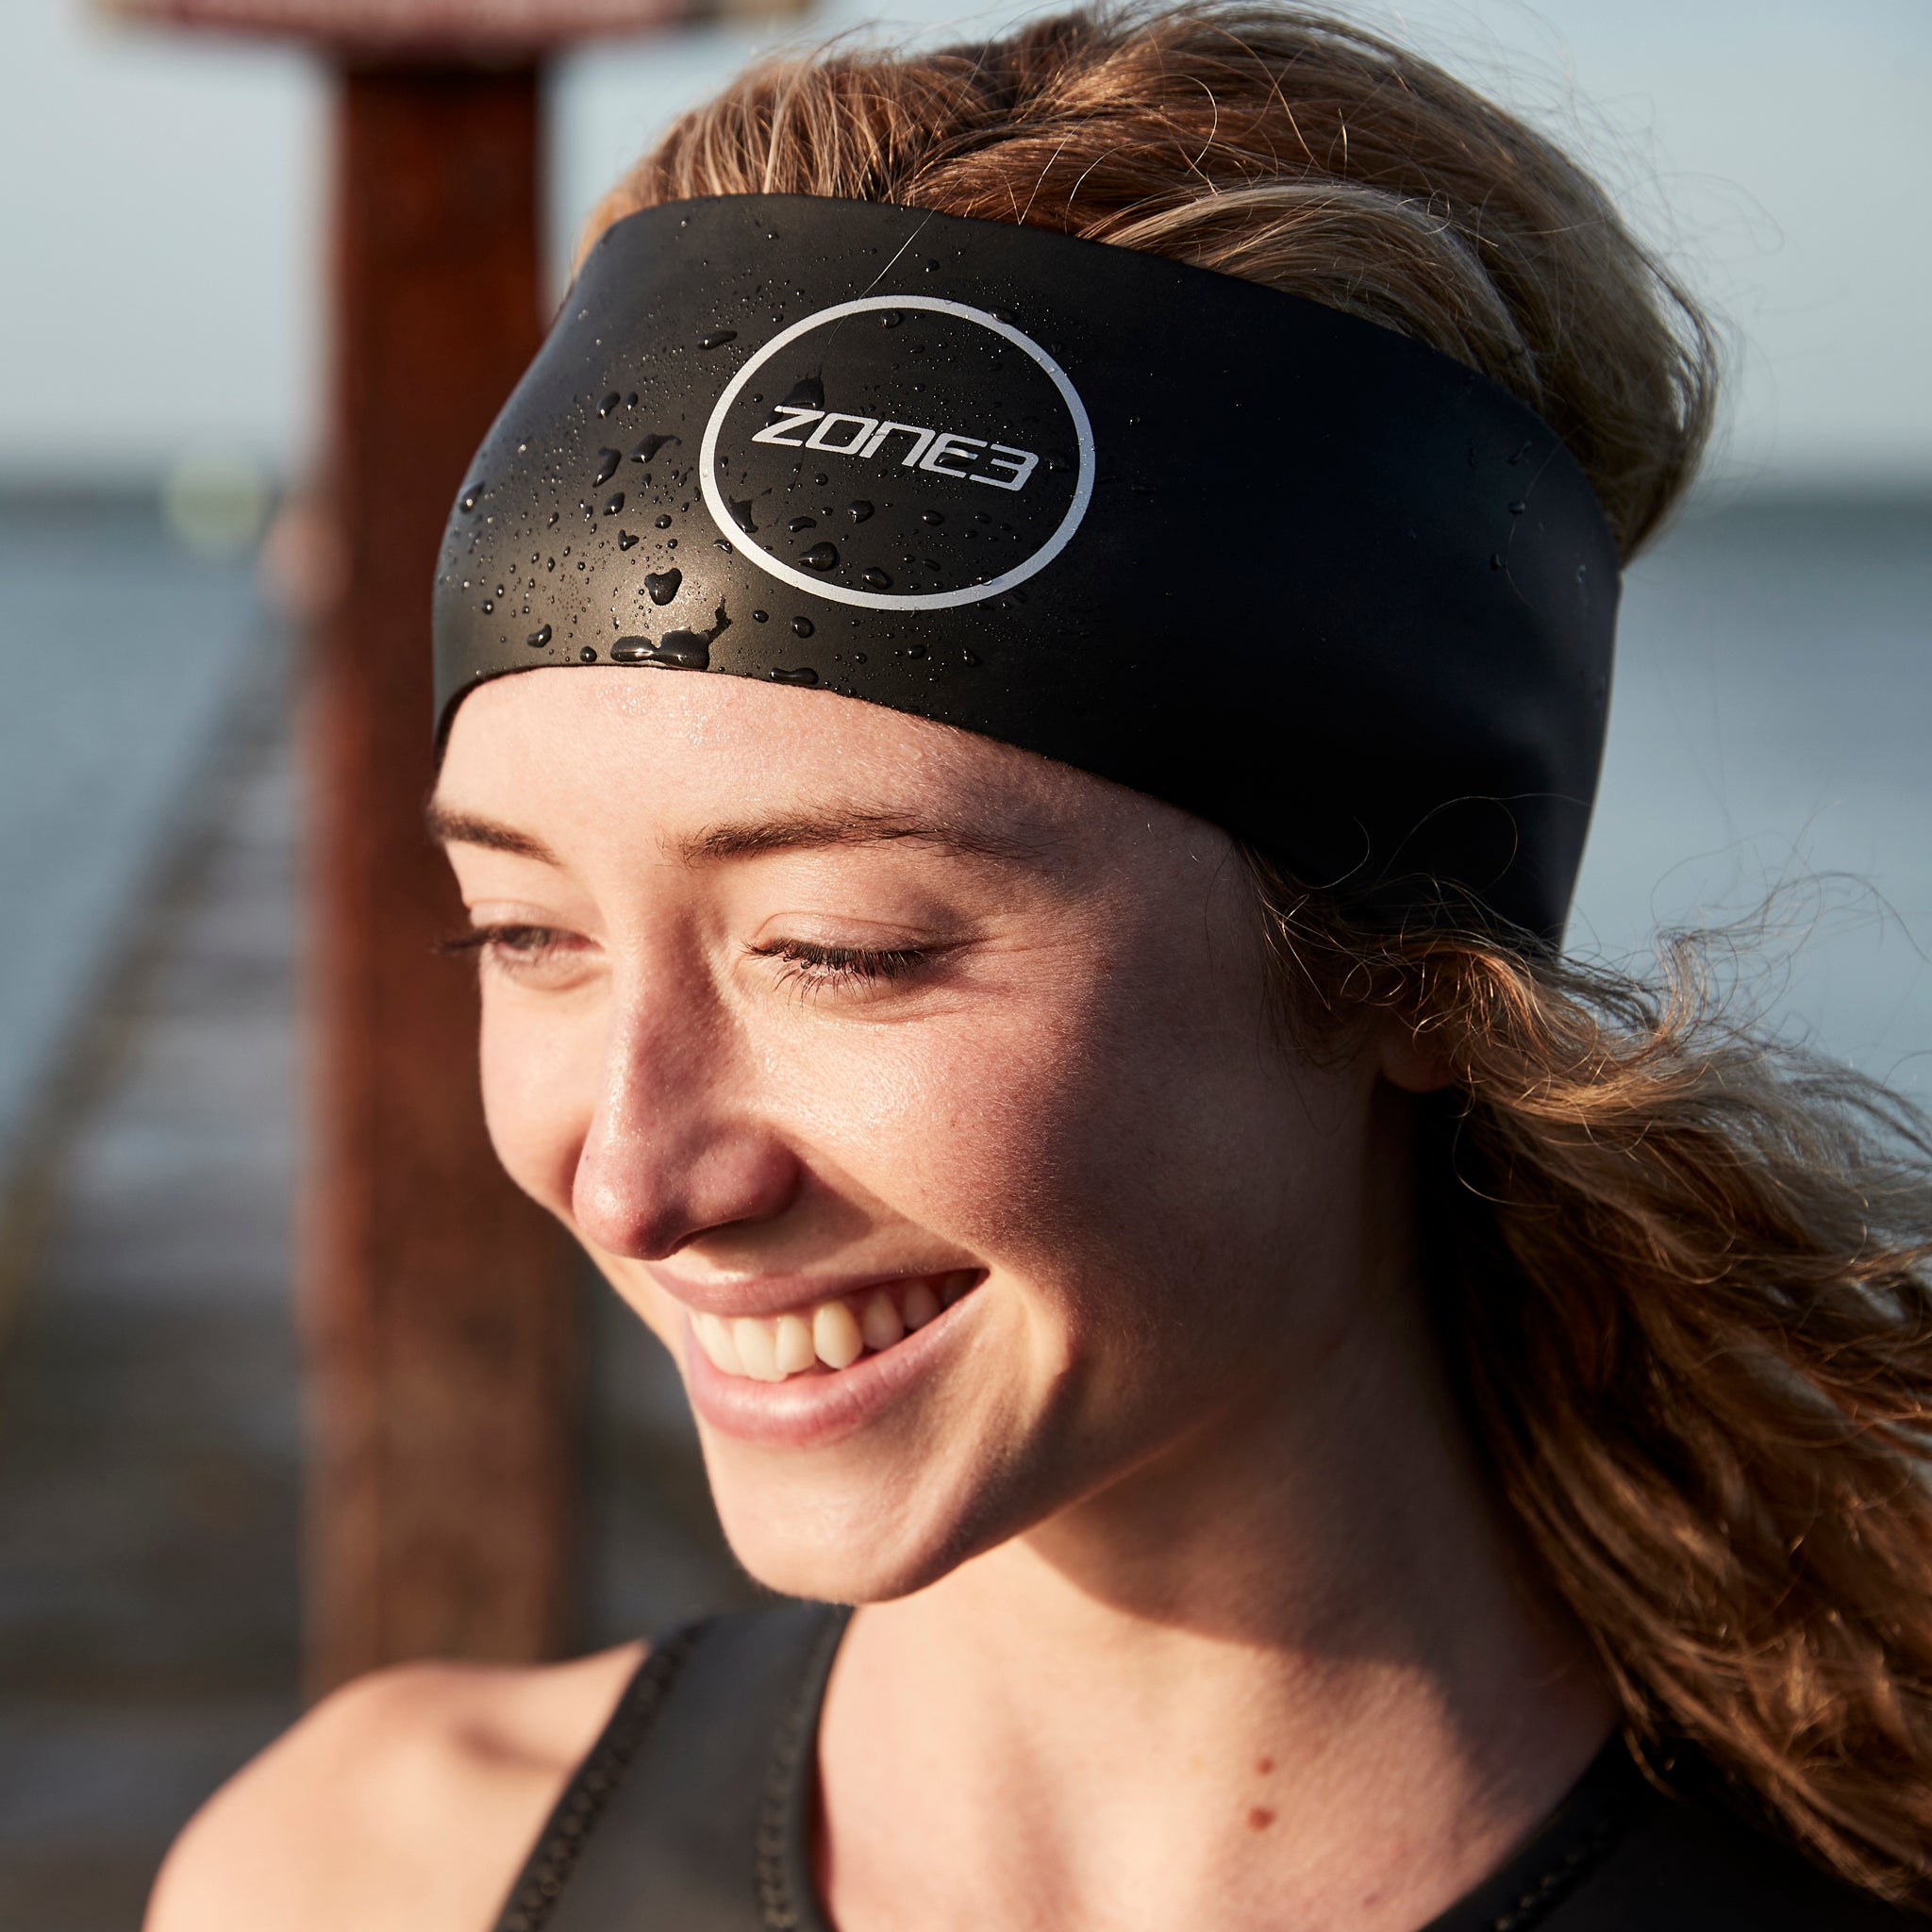 Zone3 Neoprene Swimming Headband in use